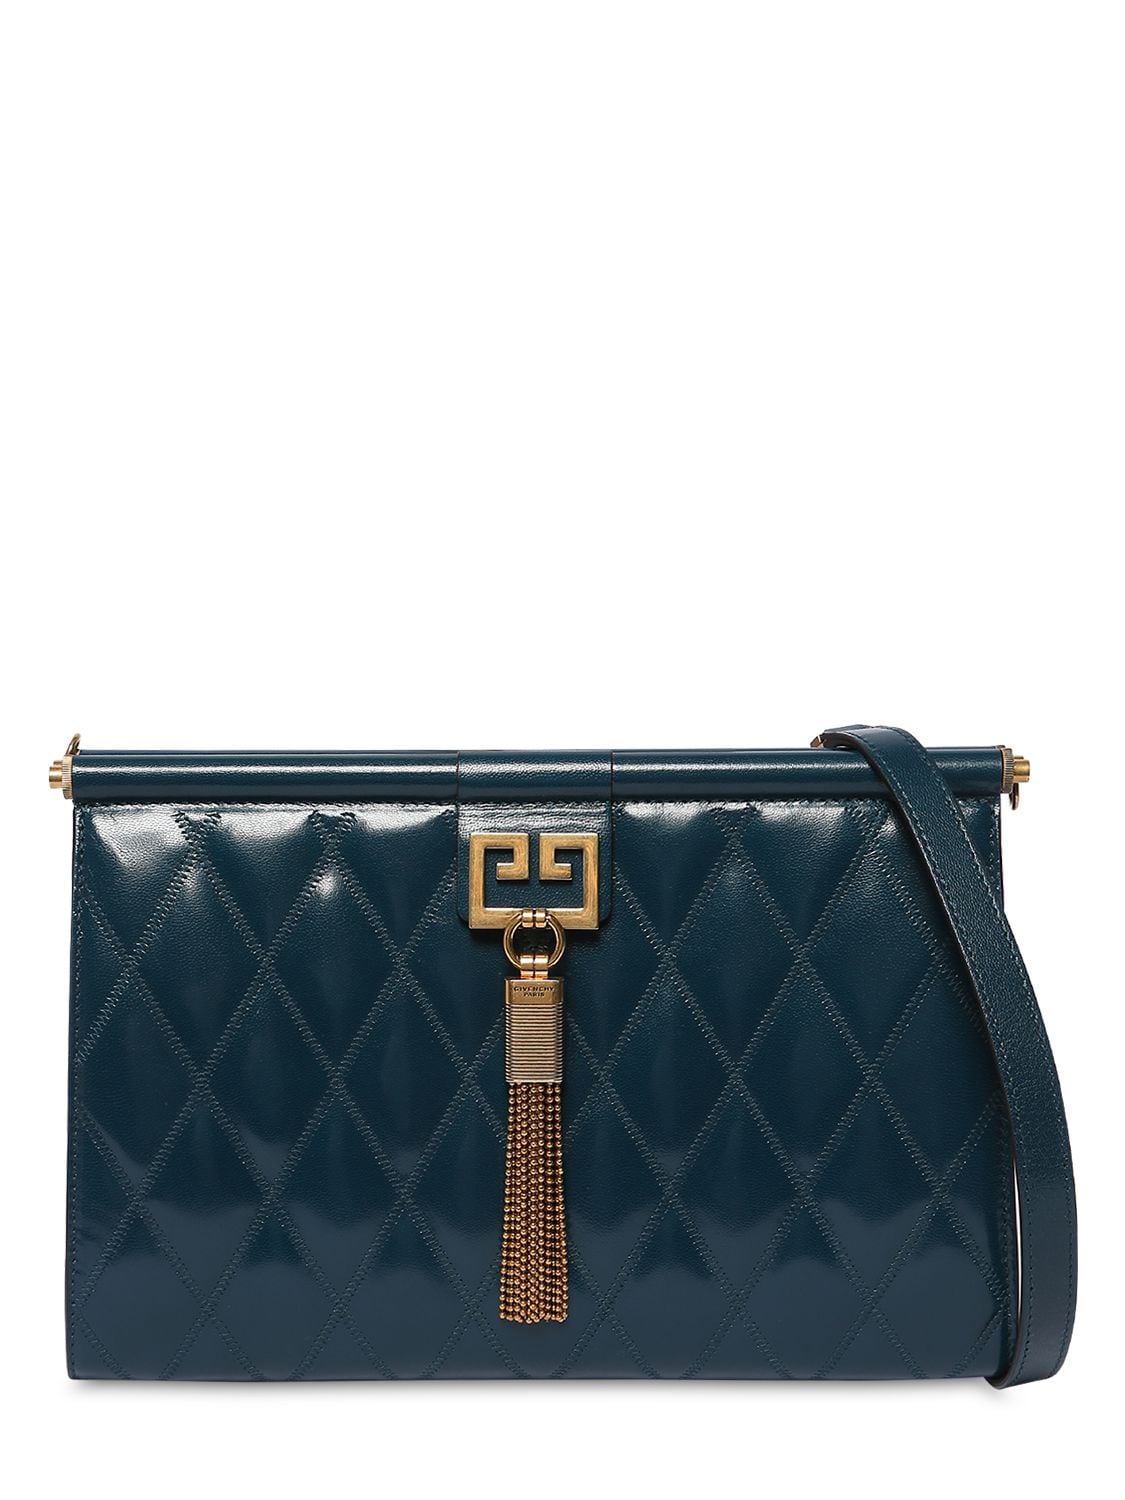 Givenchy Gem Medium Quilted Leather Shoulder Bag In Prussian Blue